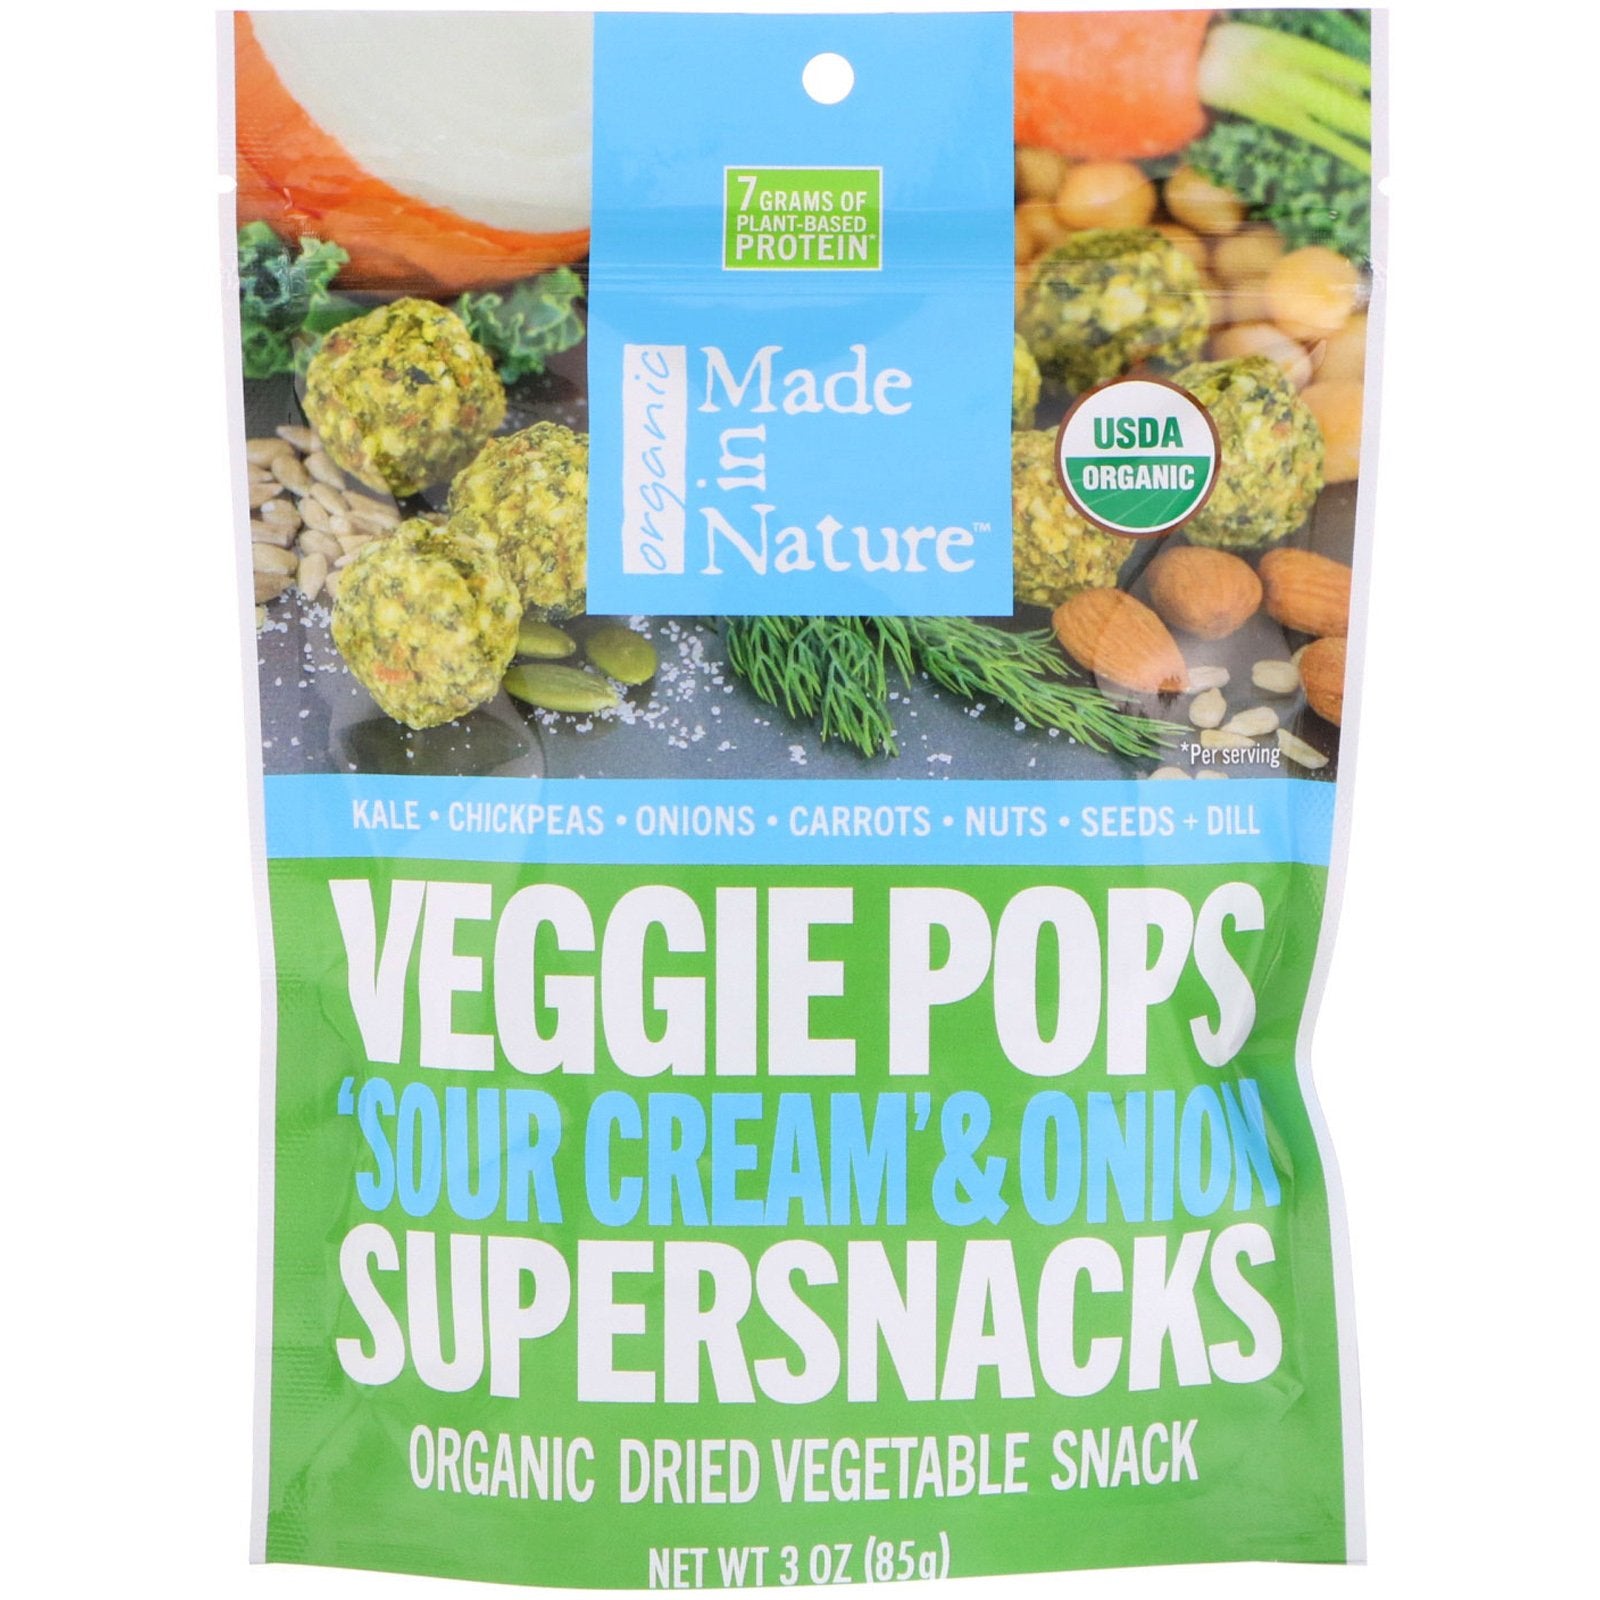 Made in Nature, Organic Veggie Pops, 'Sour Cream' & Onion Supersnacks, 3 oz (85 g)